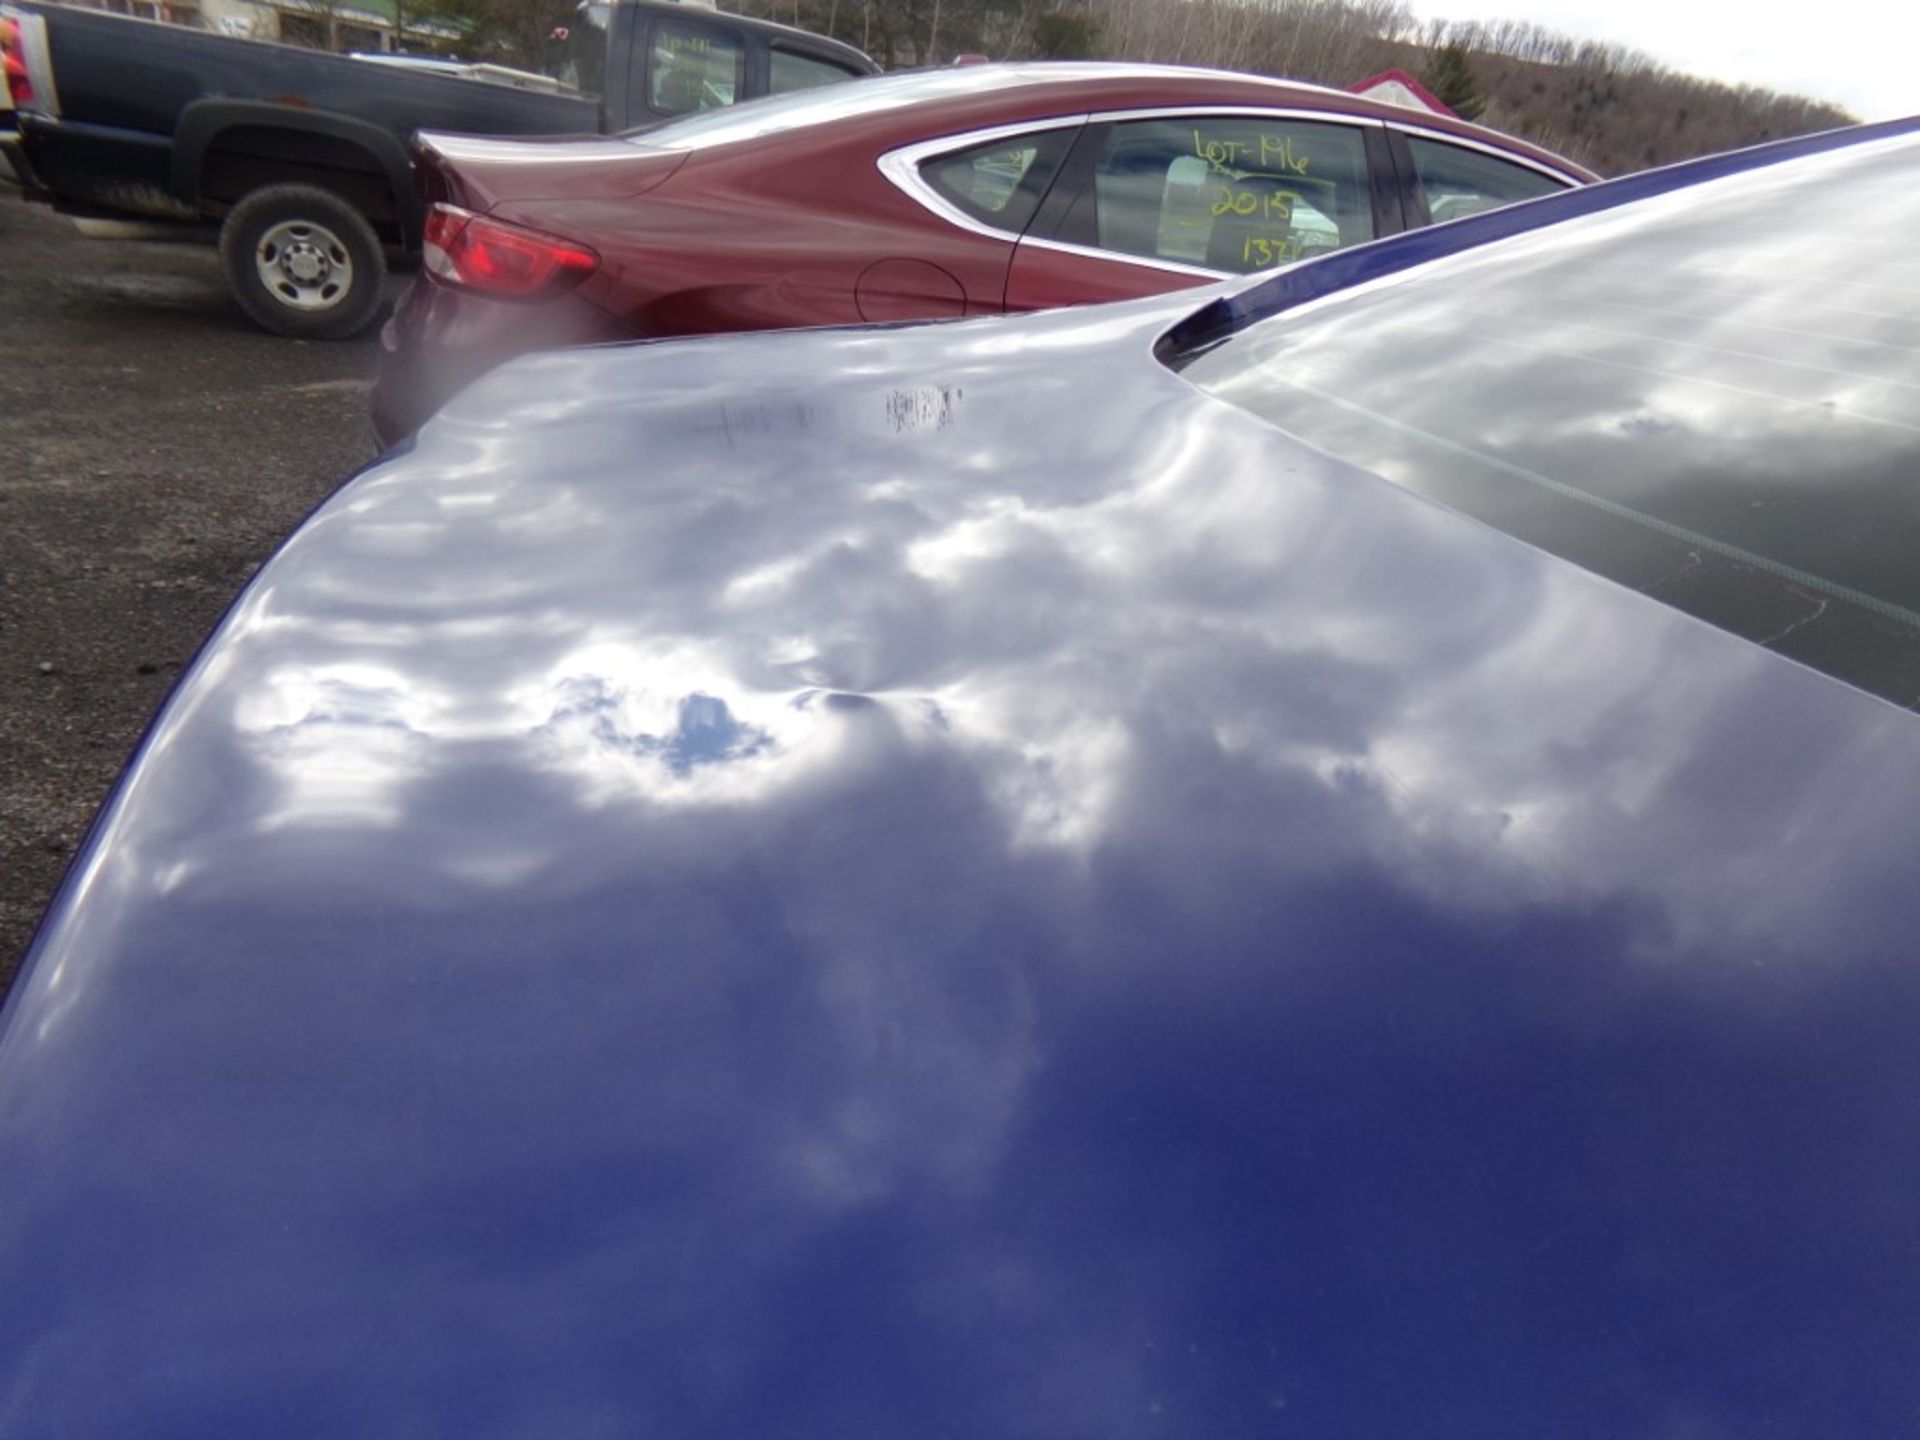 2014 Ford Fusion SE, Blue, 174,739 Miles, VIN#1FA6P0H7XE5365423, AIR BAG LIGHT IS ON, MINOR DAMAGE - Bild 13 aus 18